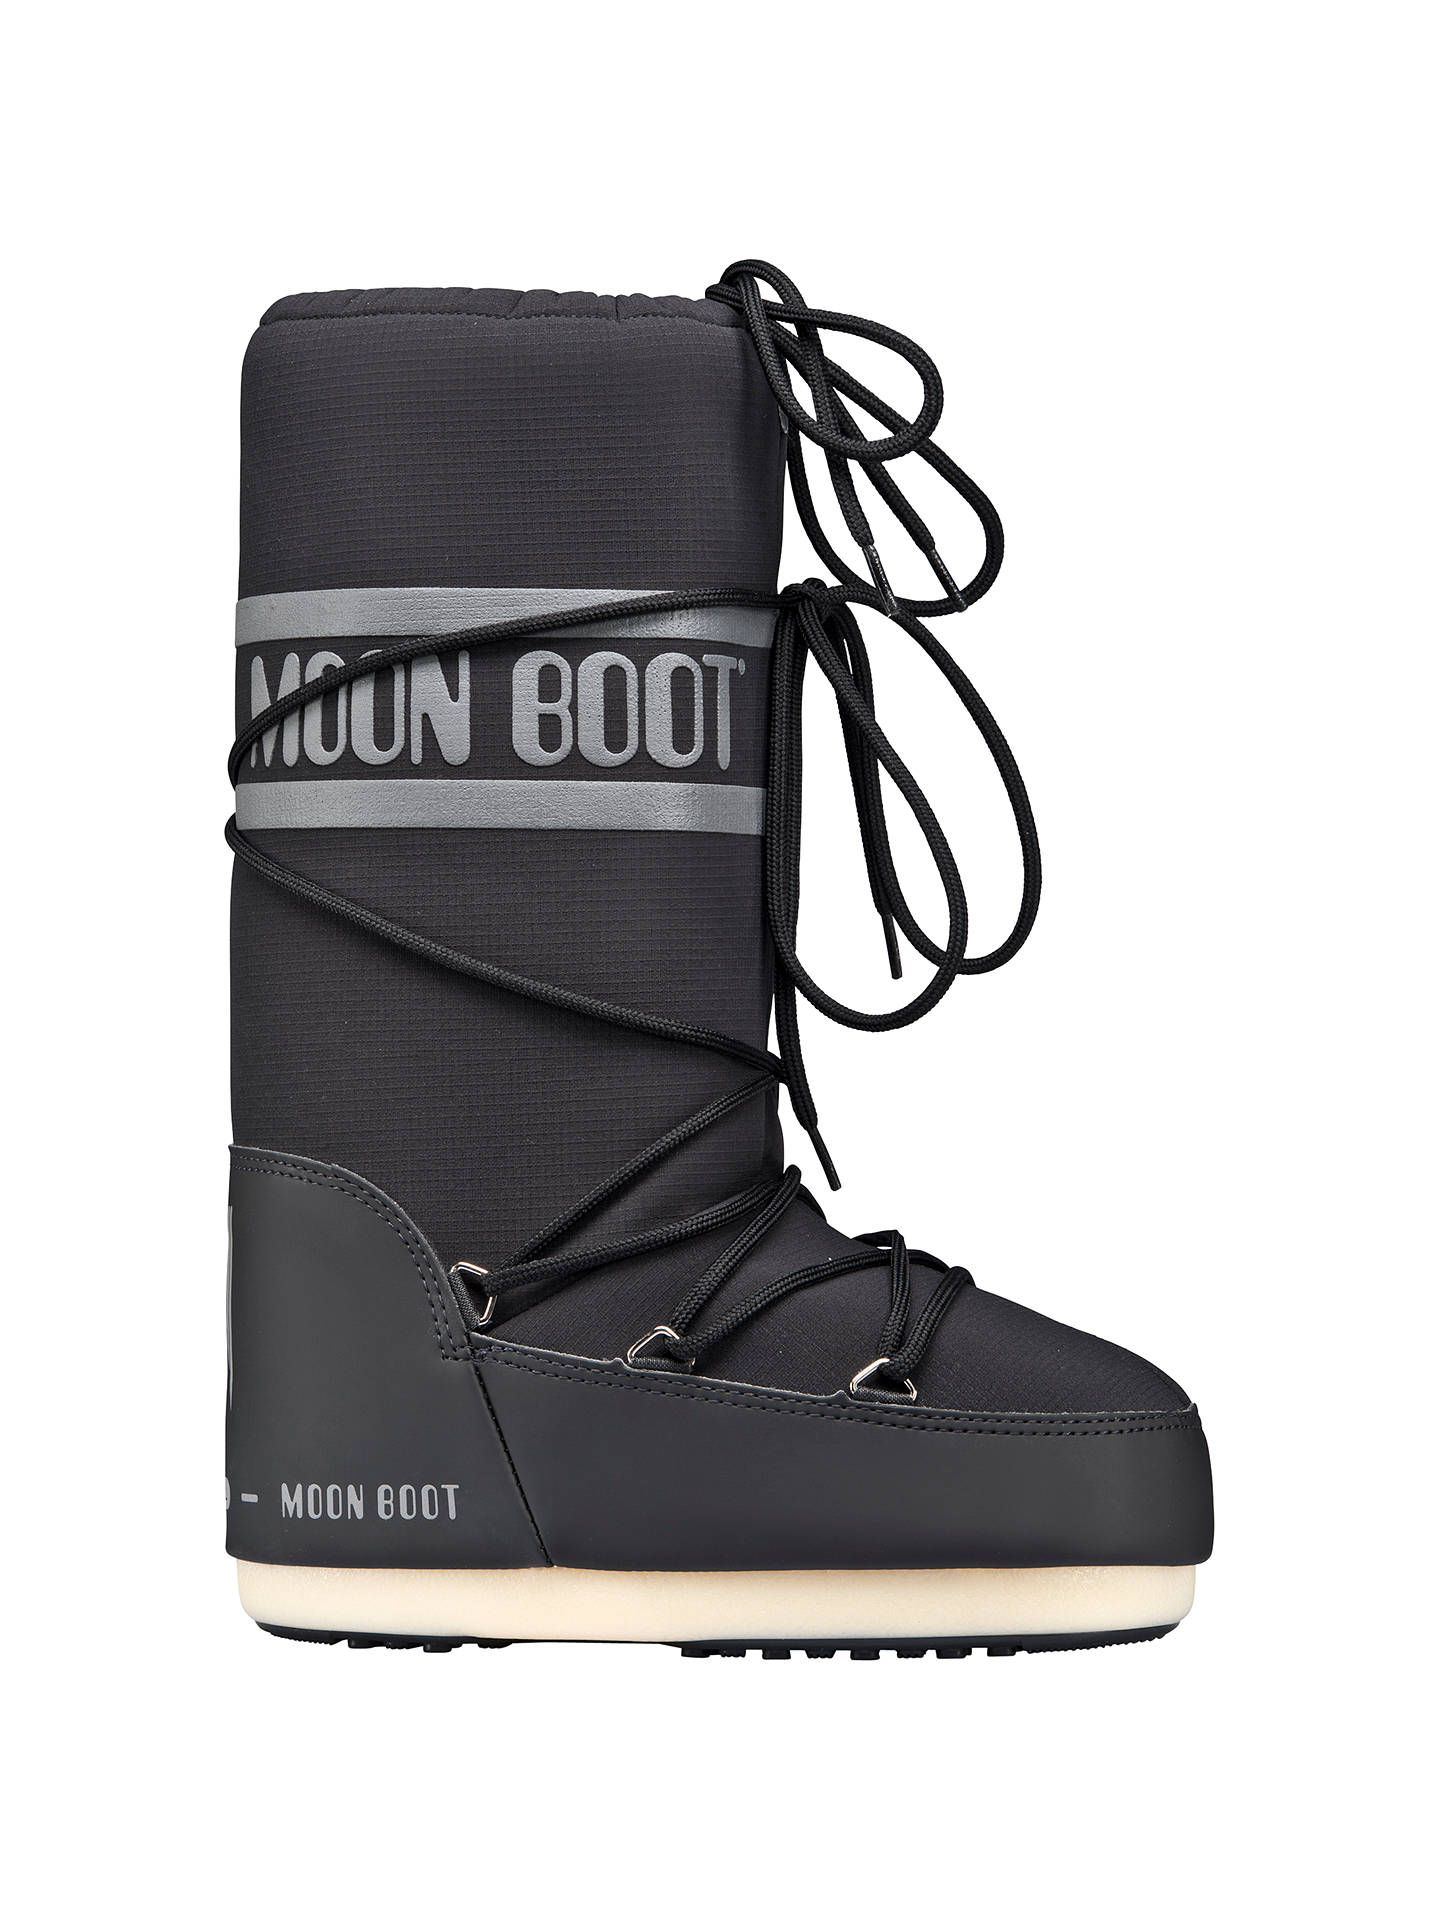 Moon Boot Neo Waterproof Long Boots Black At John Lewis Partners